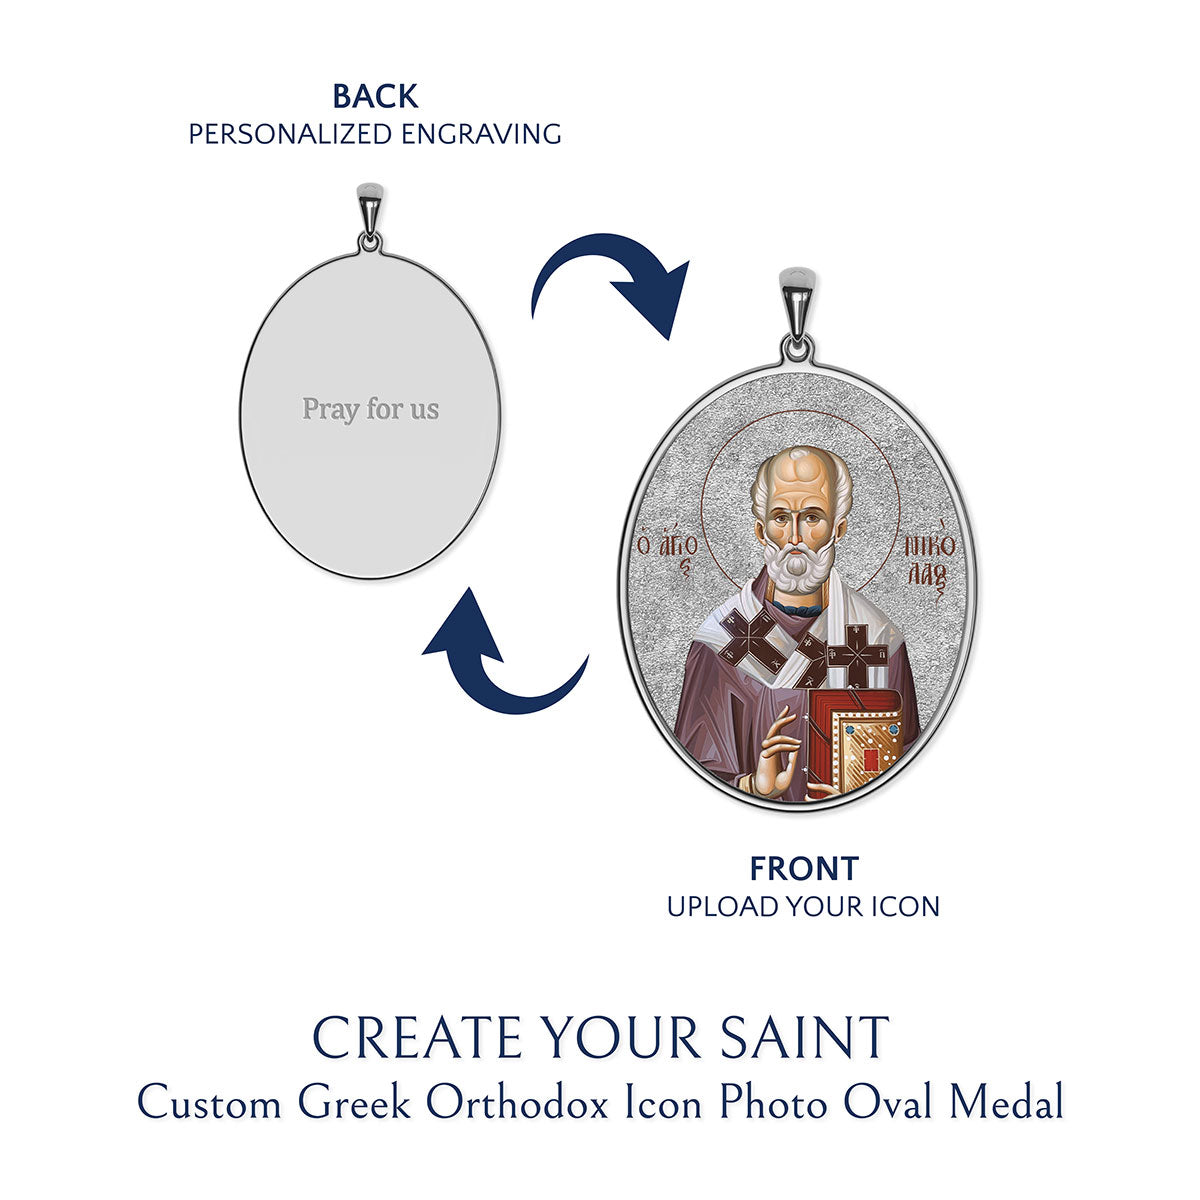 Create Your Saint - Custom Greek Orthodox Icon Oval Photo Medal